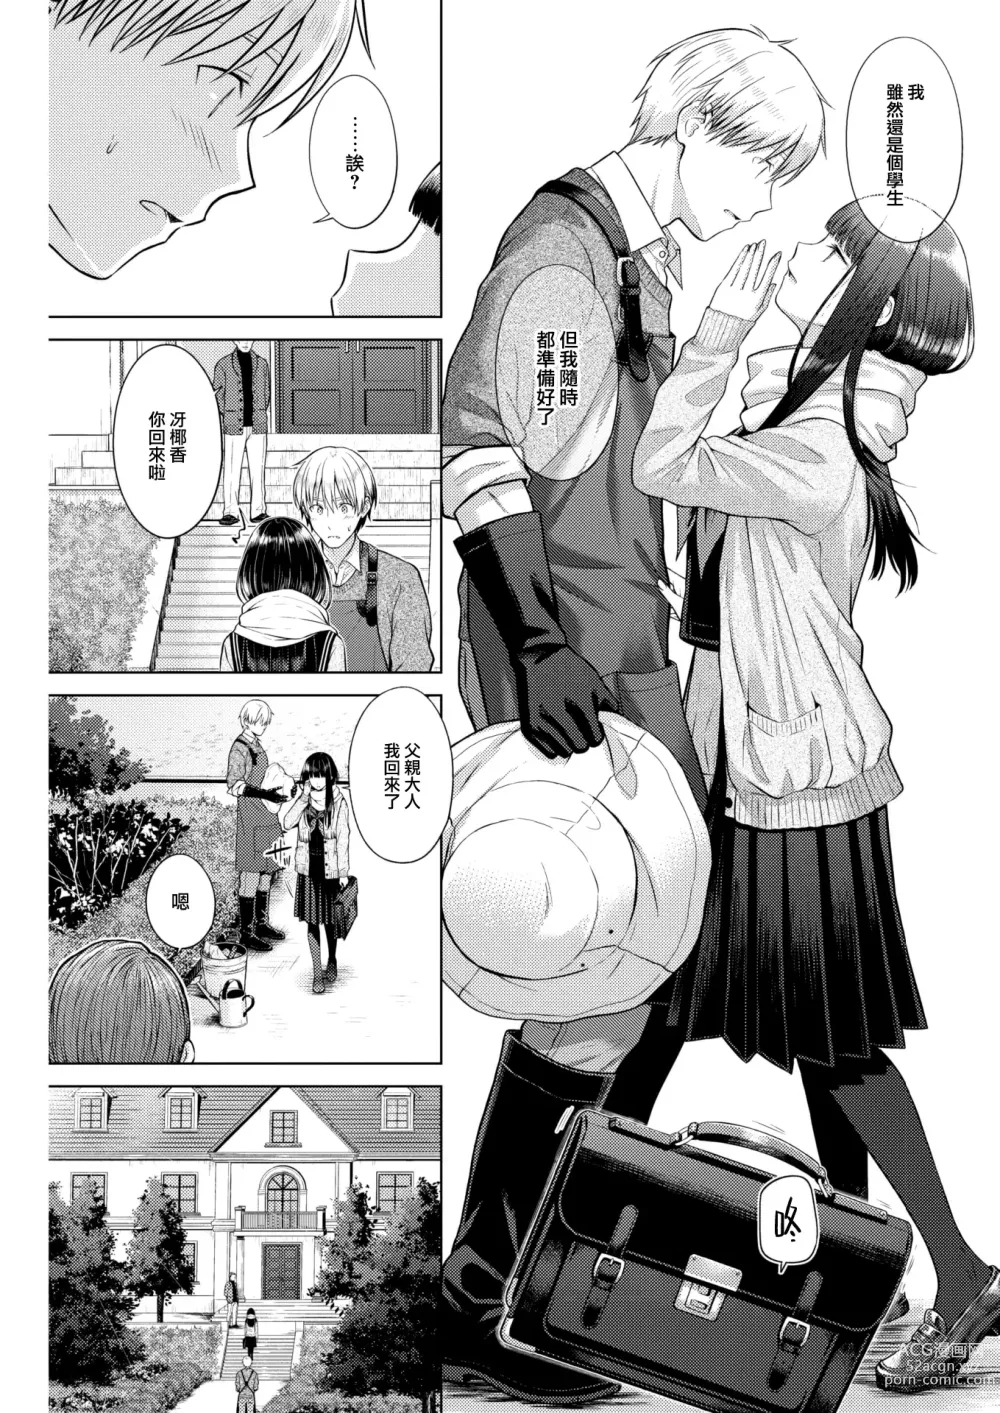 Page 6 of manga Garden of EDEN